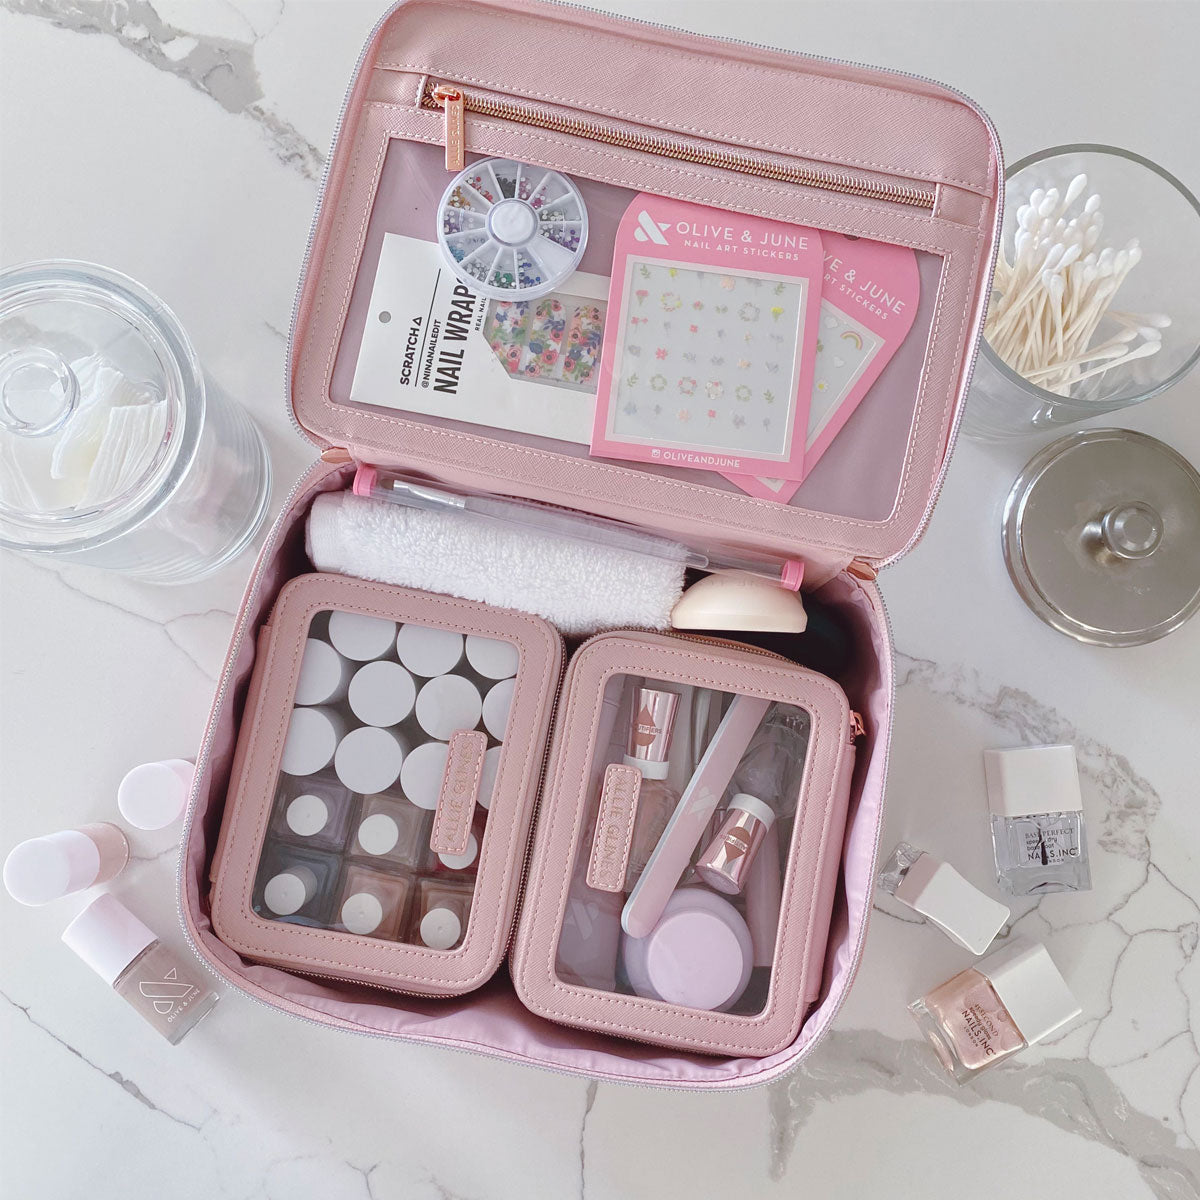 Anyone own the Allie Glines modular makeup bags? : r/makeuporganization